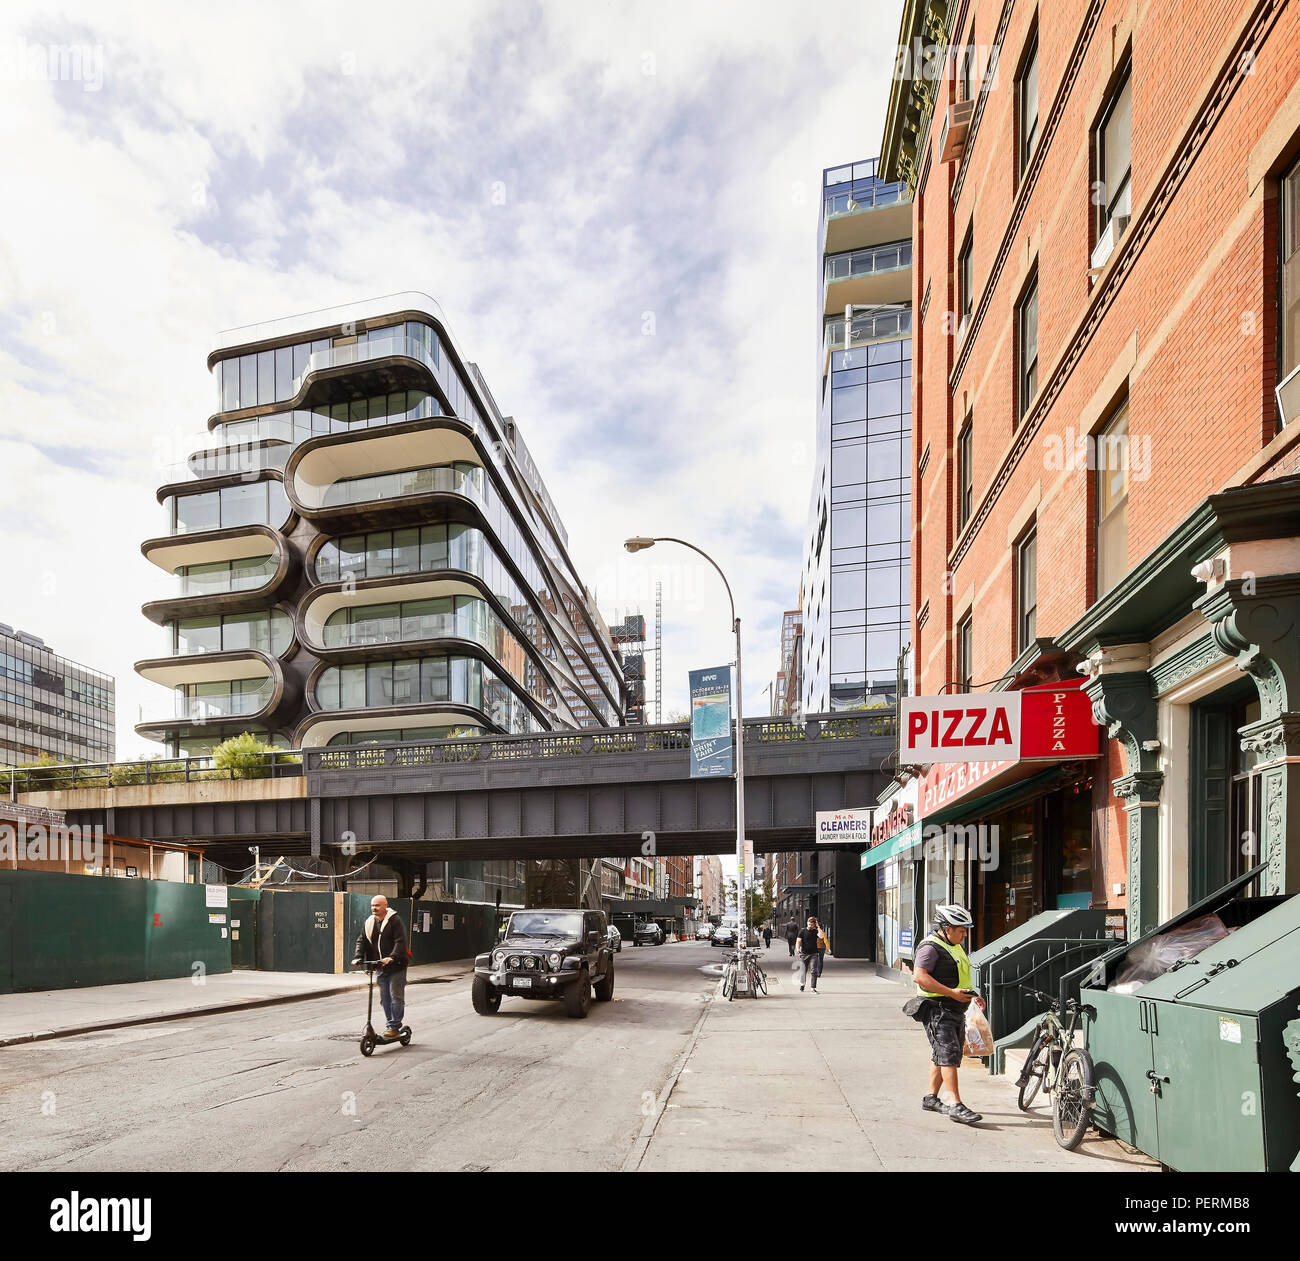 Façade extérieure avec vue sur New York Street. 520 West 28th Street, New York, United States. Architecte : Zaha Hadid Architects, 2017. Banque D'Images